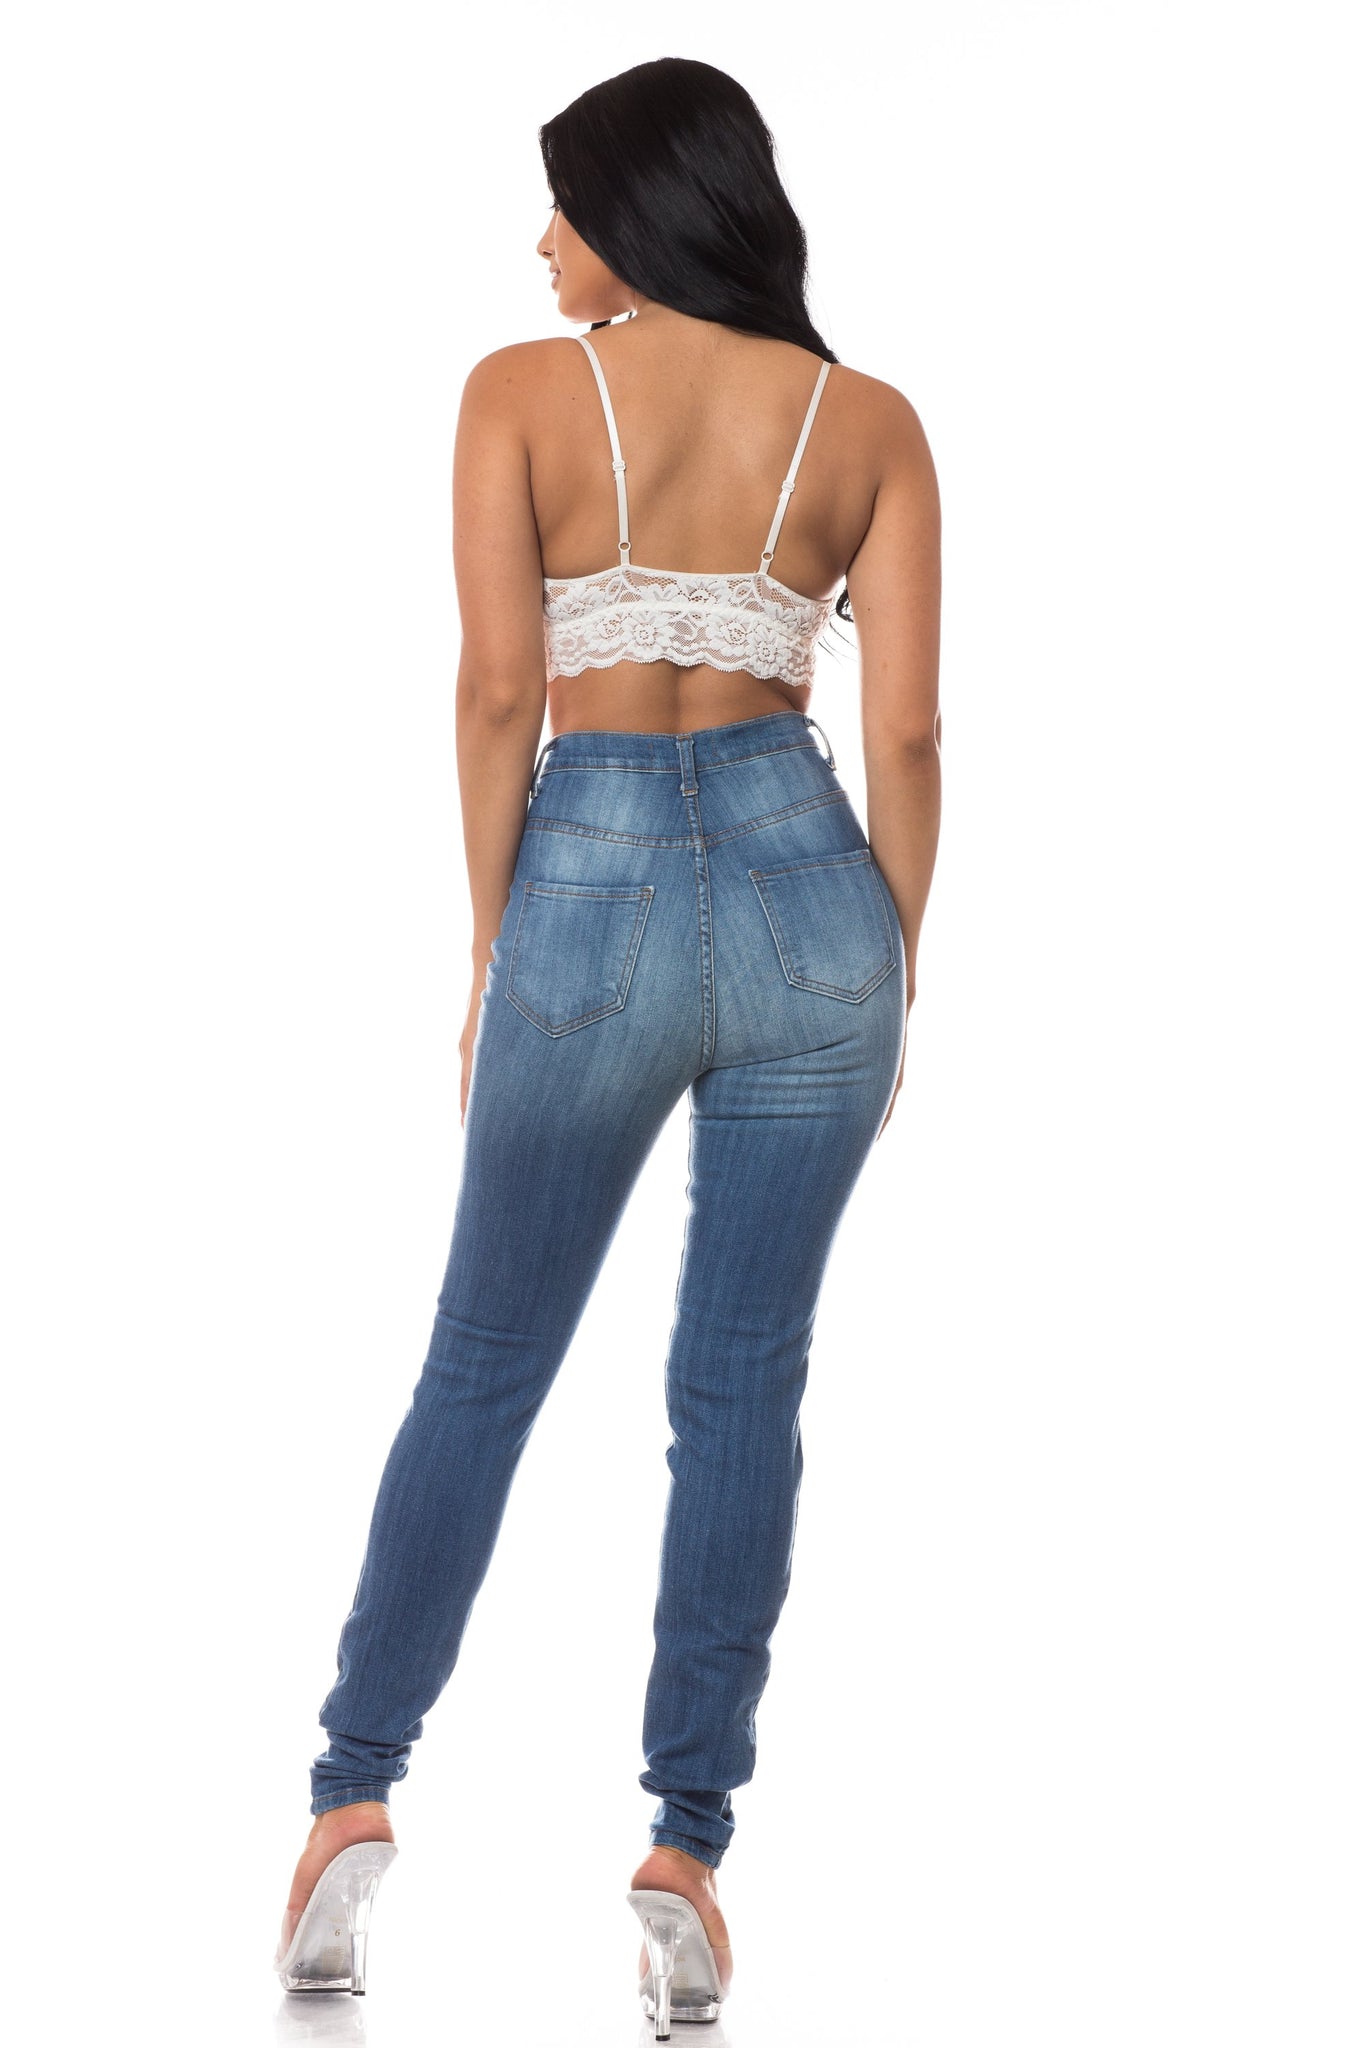 Women's Printed Jeans, Printed Skinny Jeans